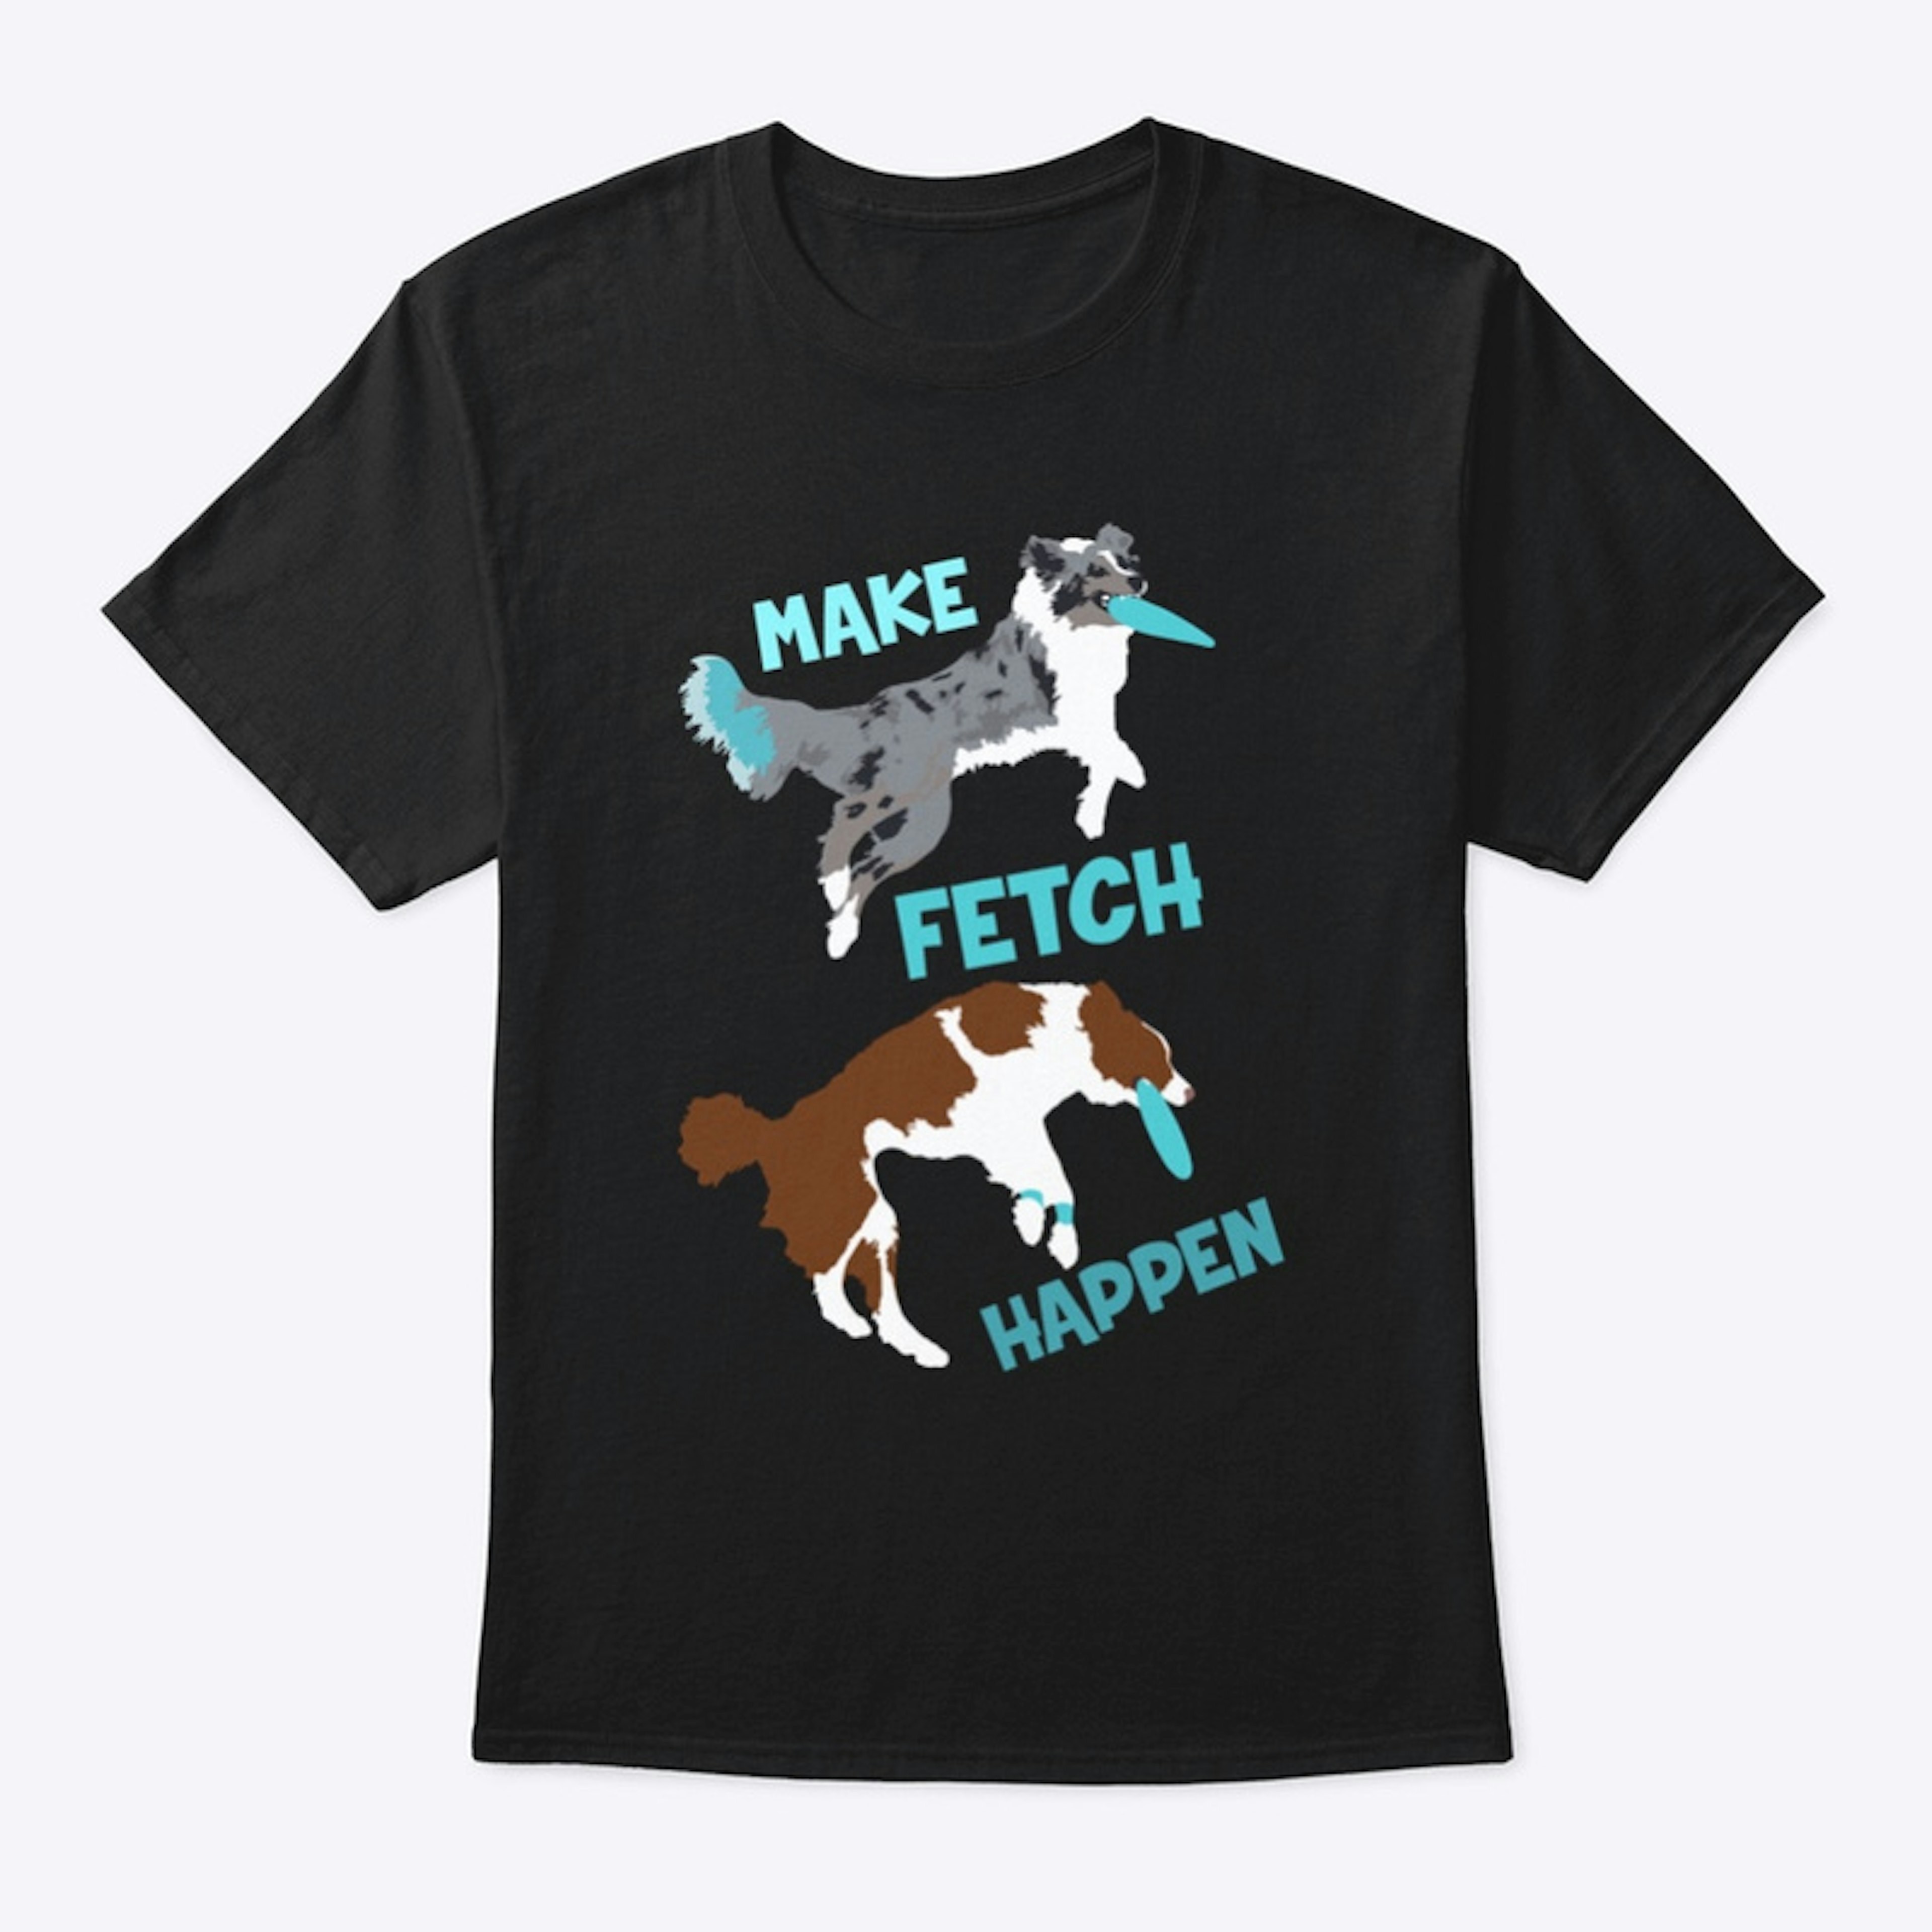 Make Fetch Happen!